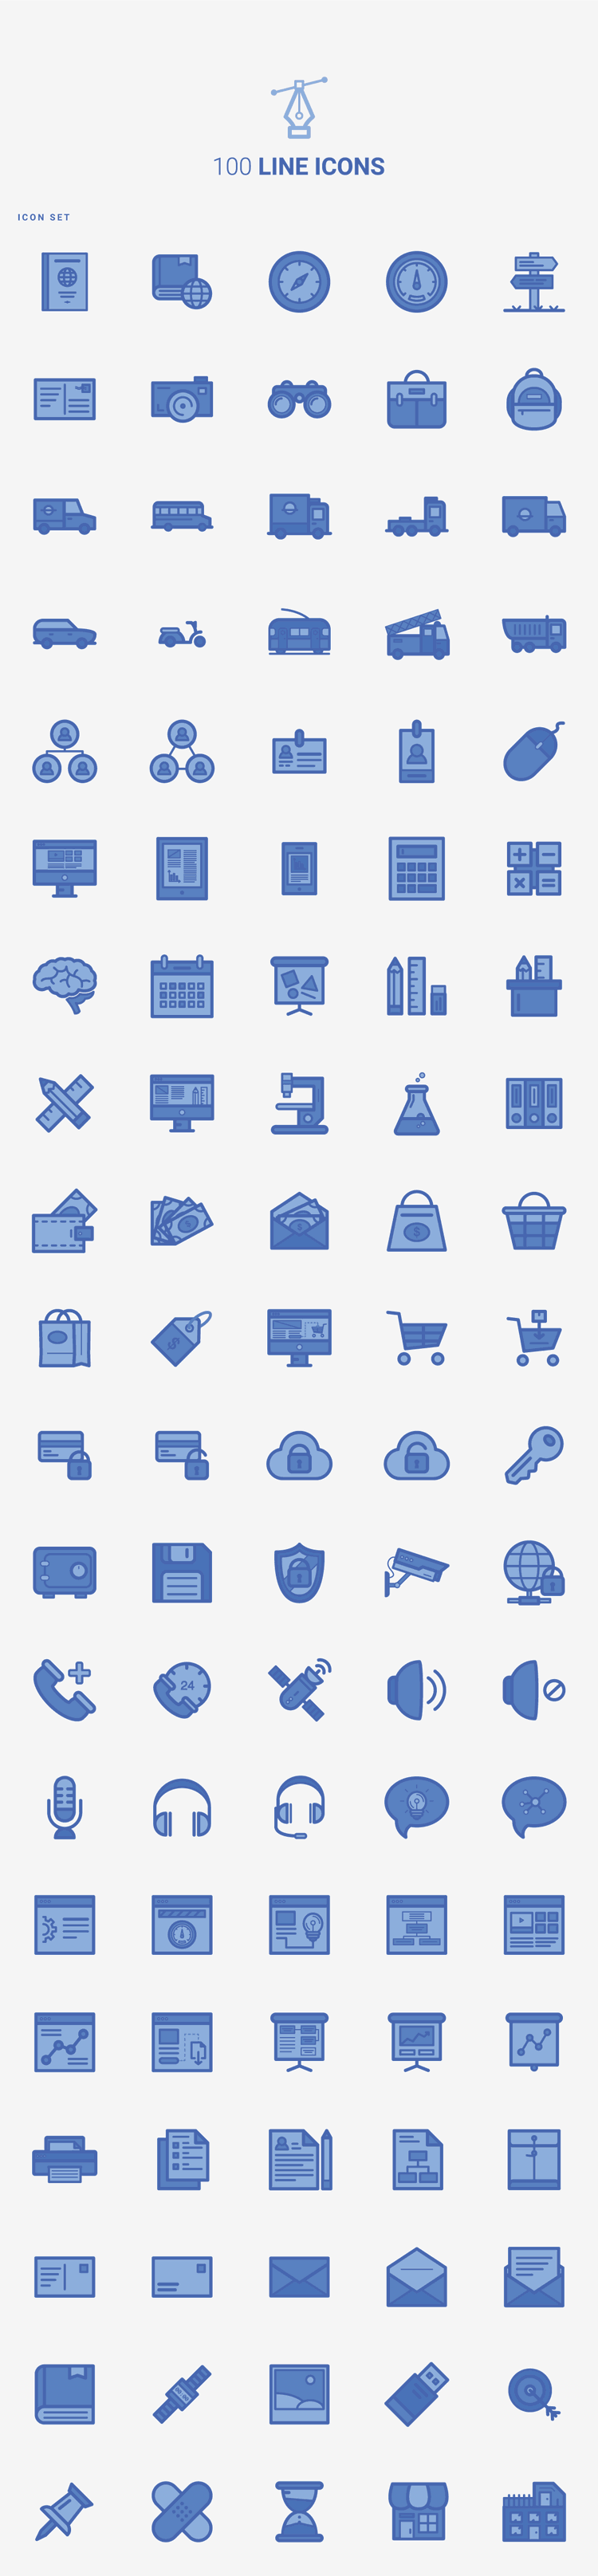 100-free-line-icons